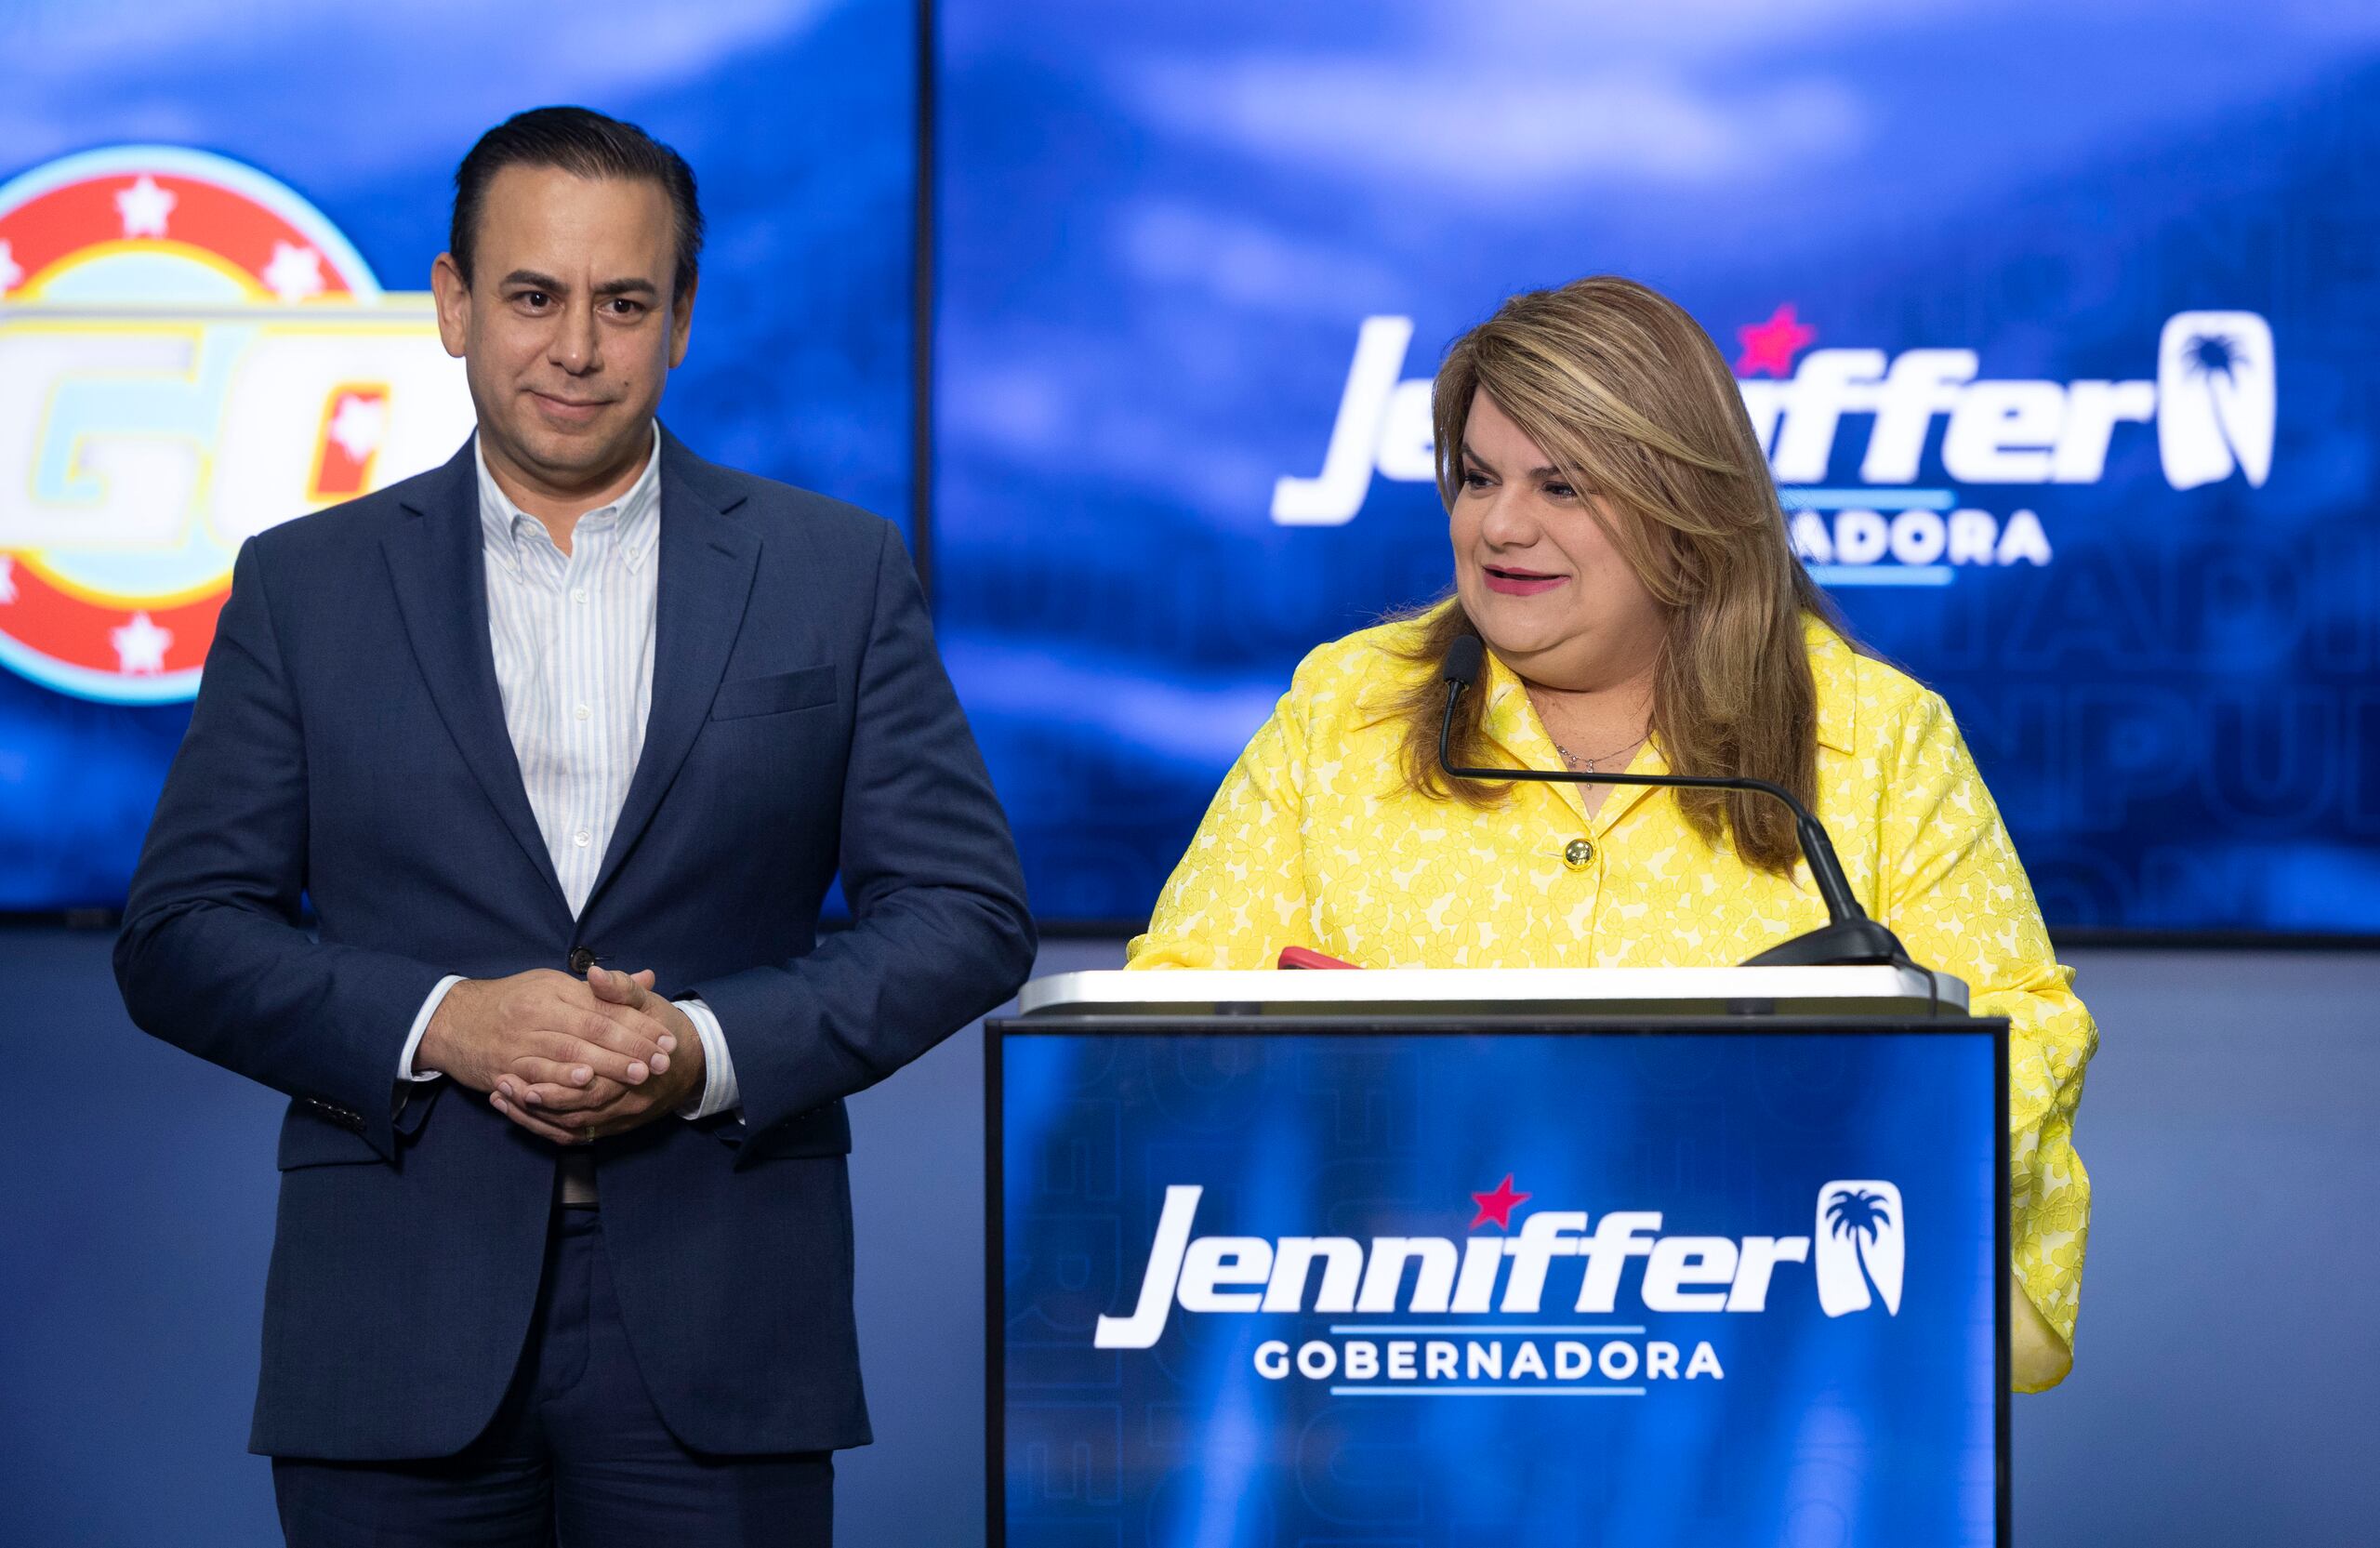 En el PNP, William Villafañe y Jenniffer González salieron favorecidos.